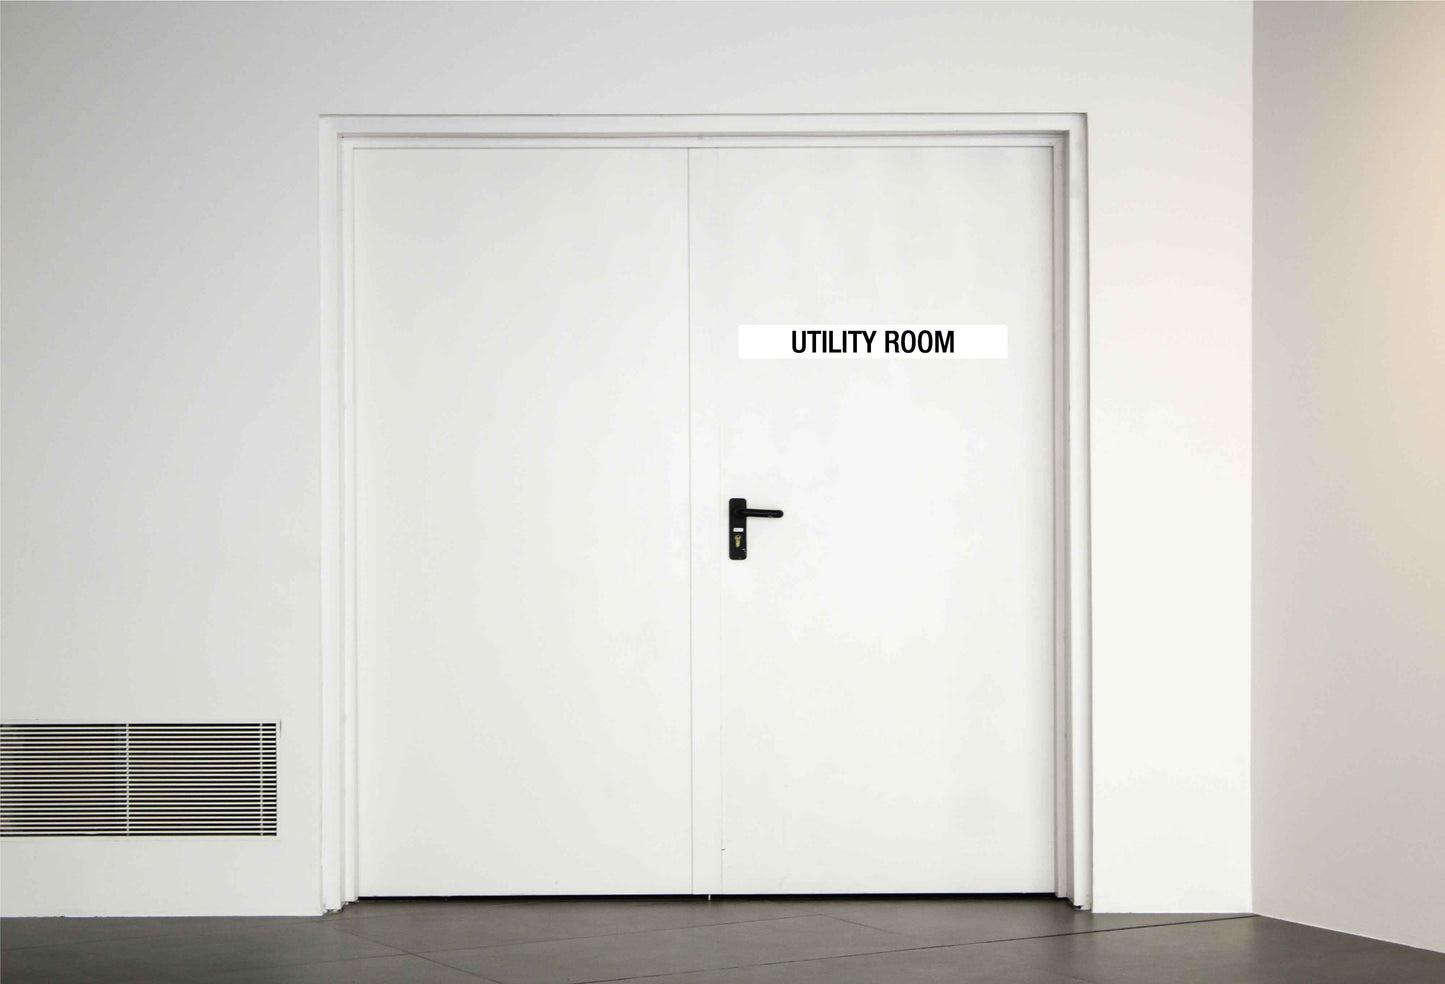 Lift Motor Room - Statutory Sign